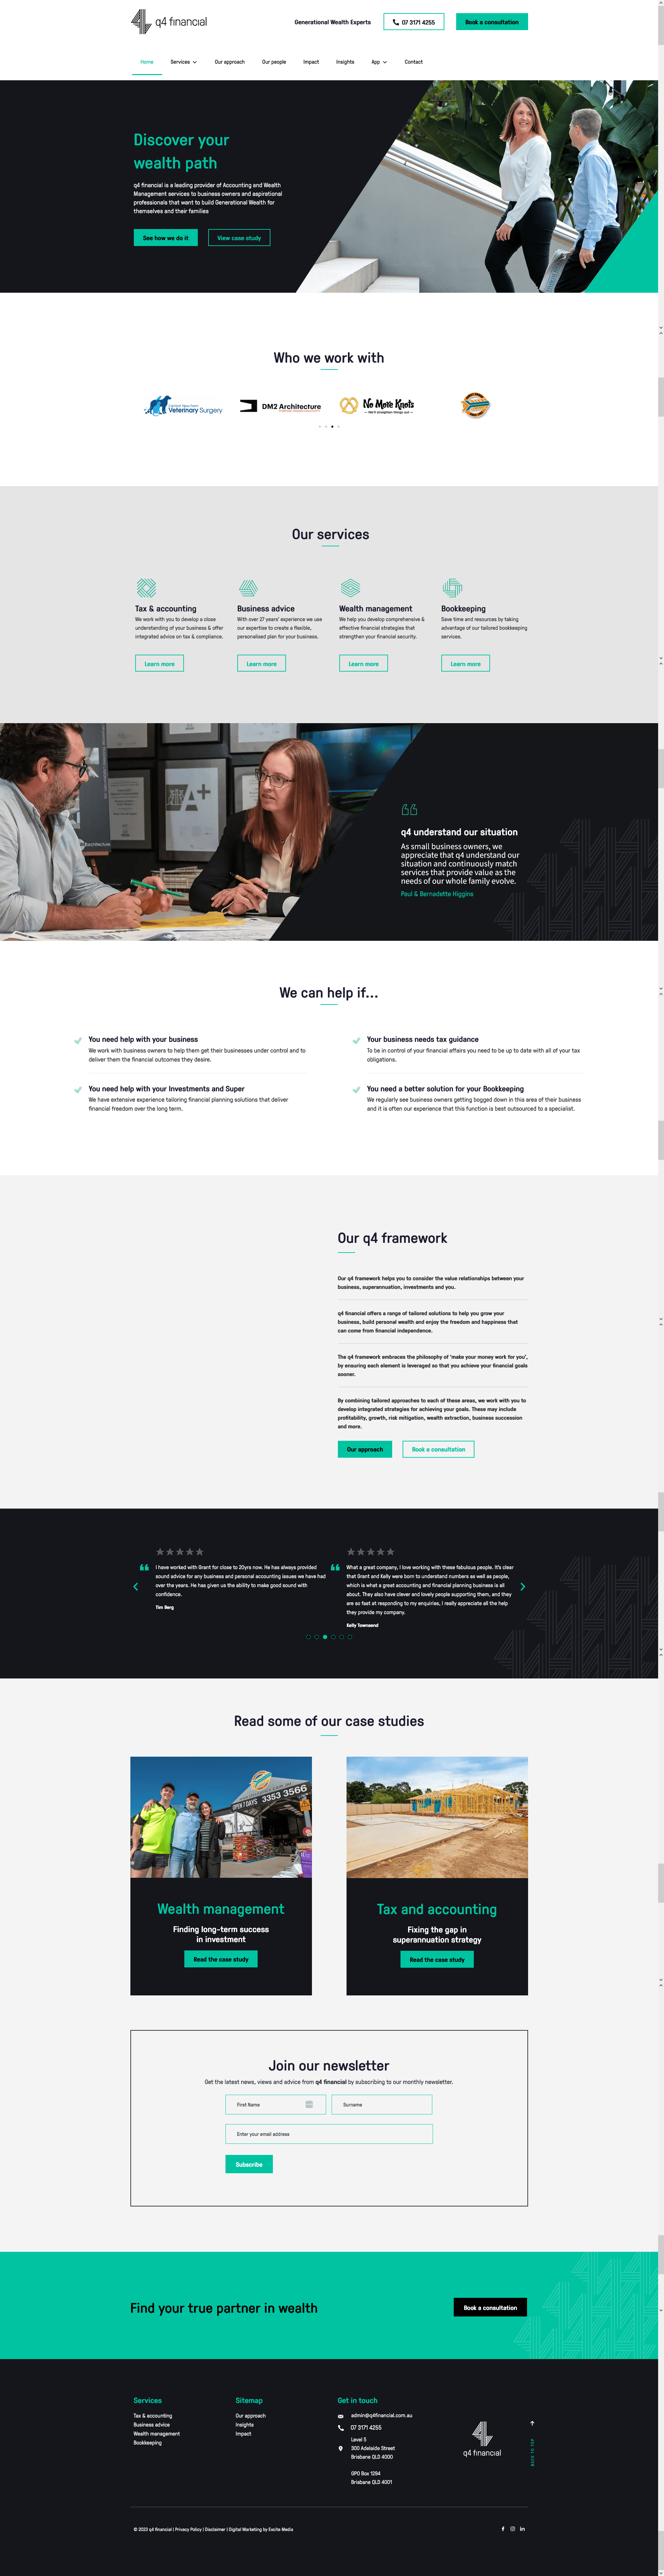 Q4 Financial homepage design